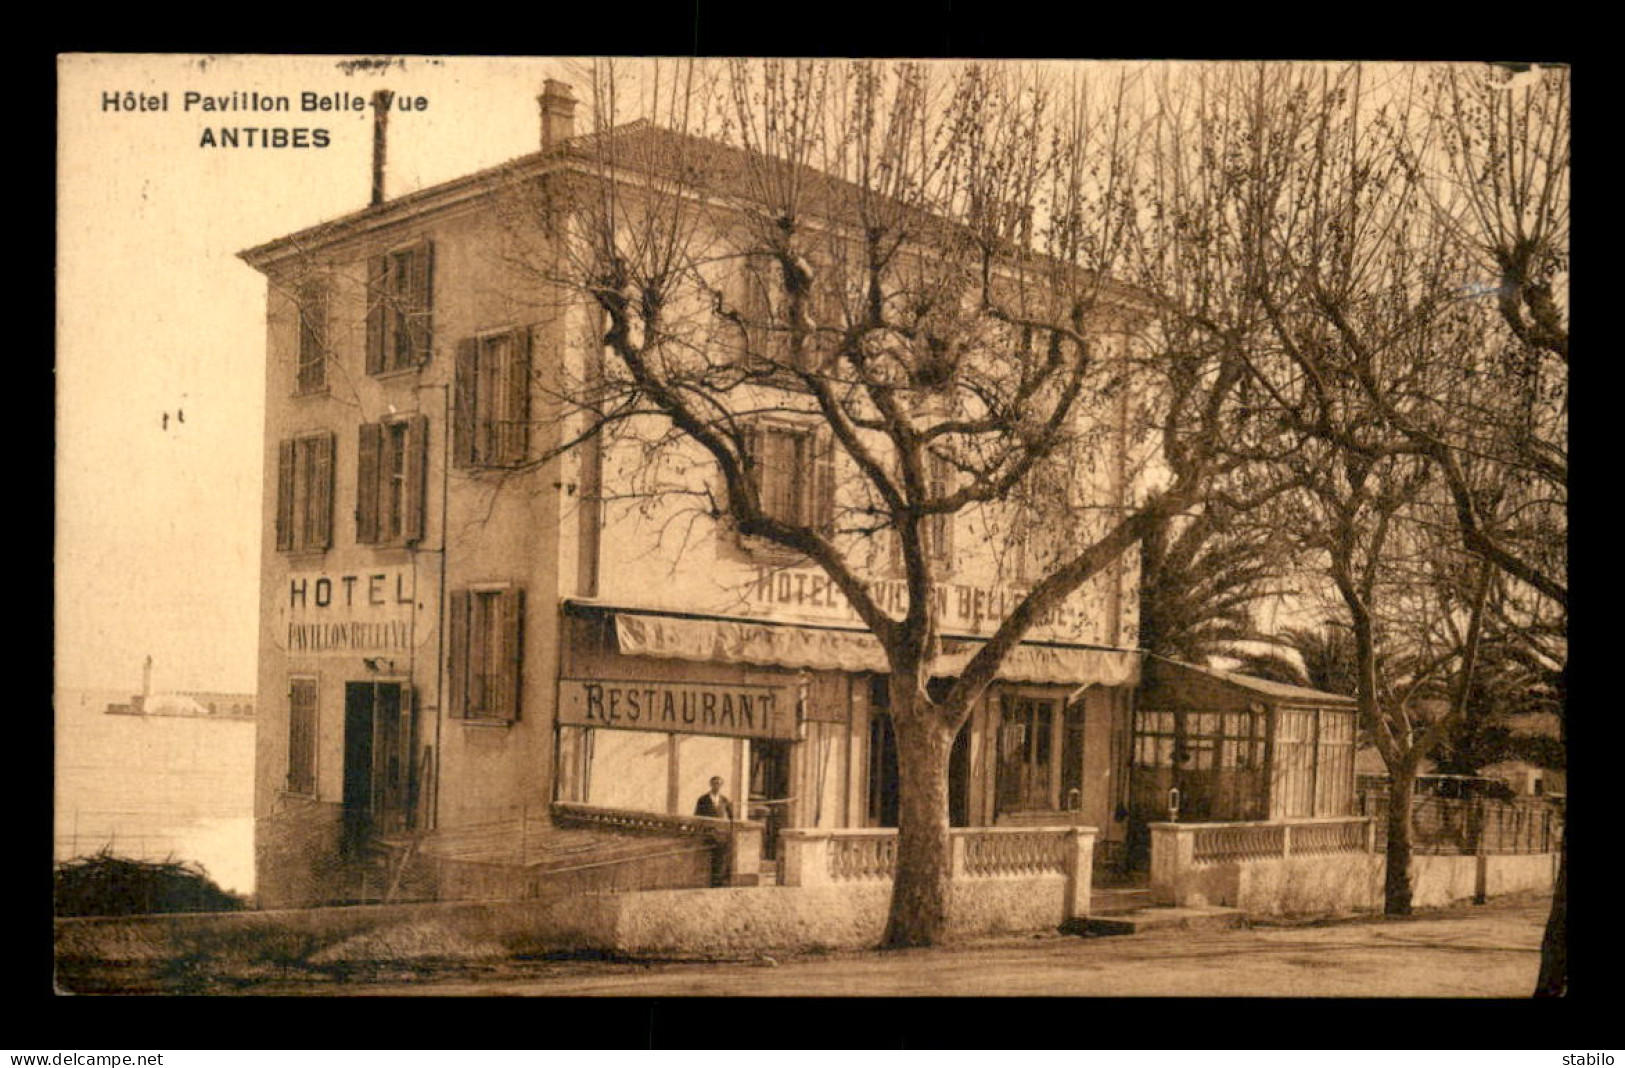 06 - ANTIBES - HOTEL PAVILLON BELLE-VUE - J. GAILLARD PROPRIETAIRE - Antibes - Old Town